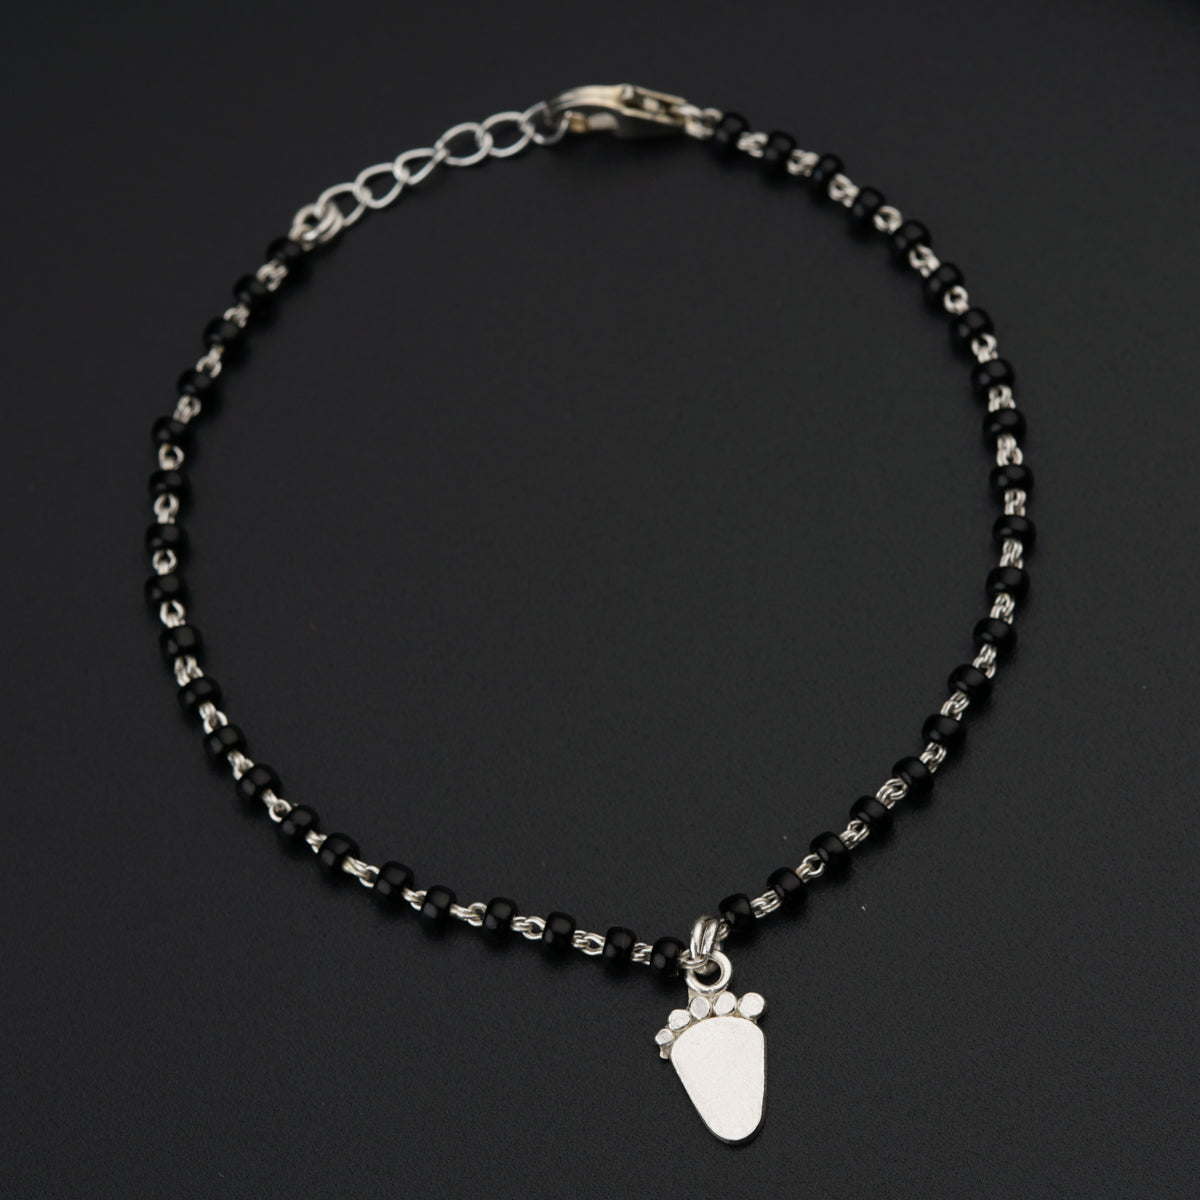 Silver Charm Mangalsutra bracelet